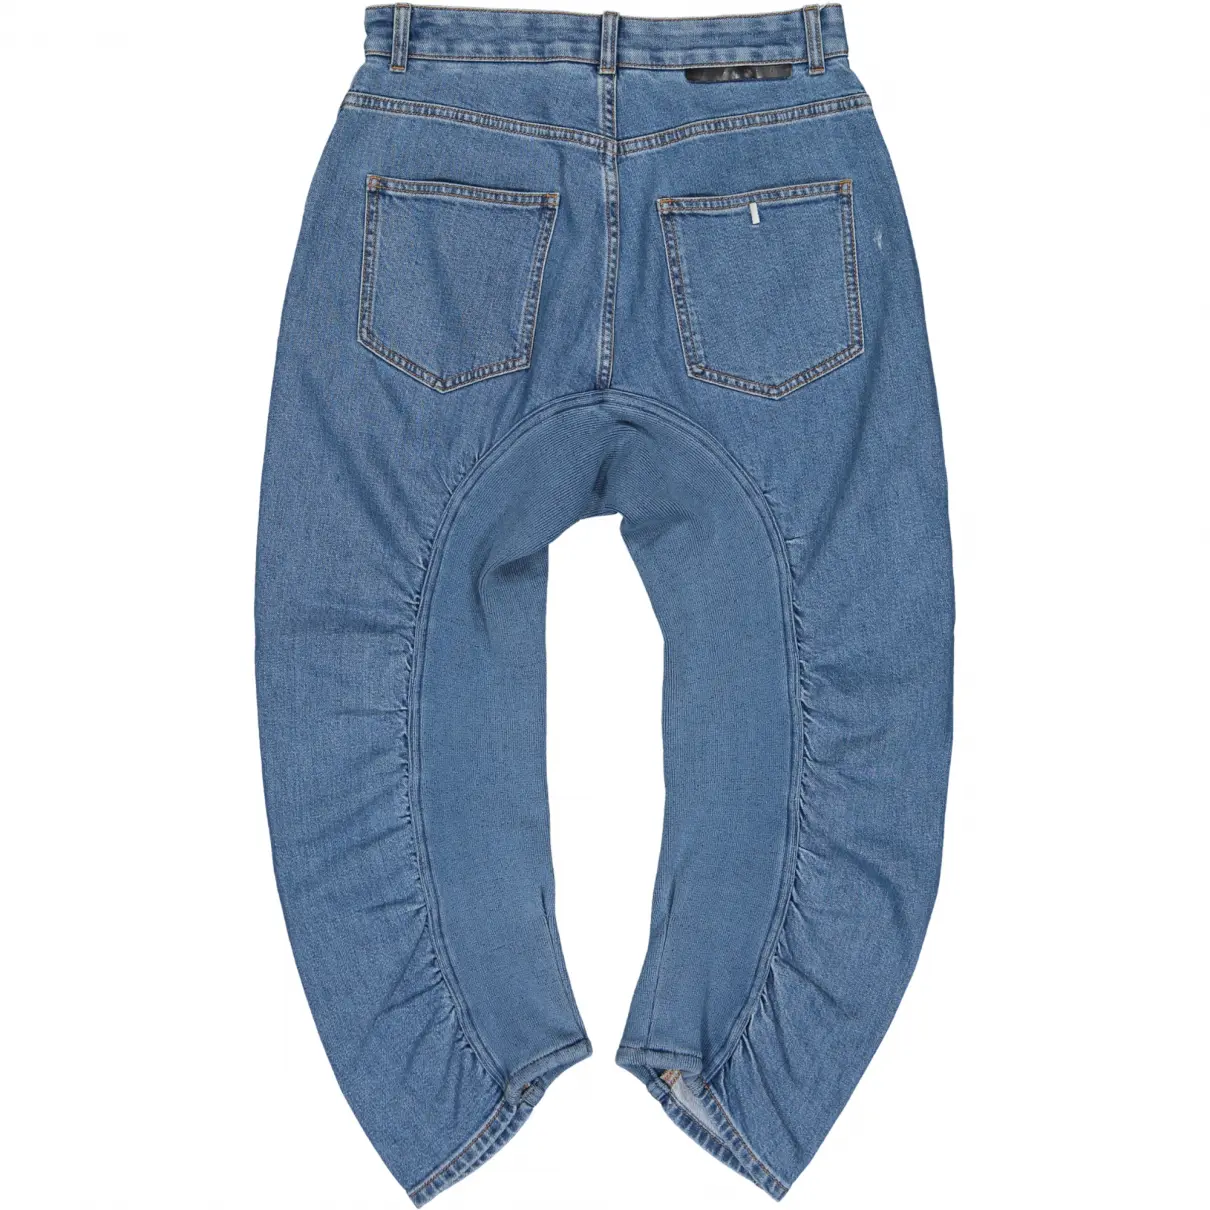 Buy Stella McCartney Large jeans online